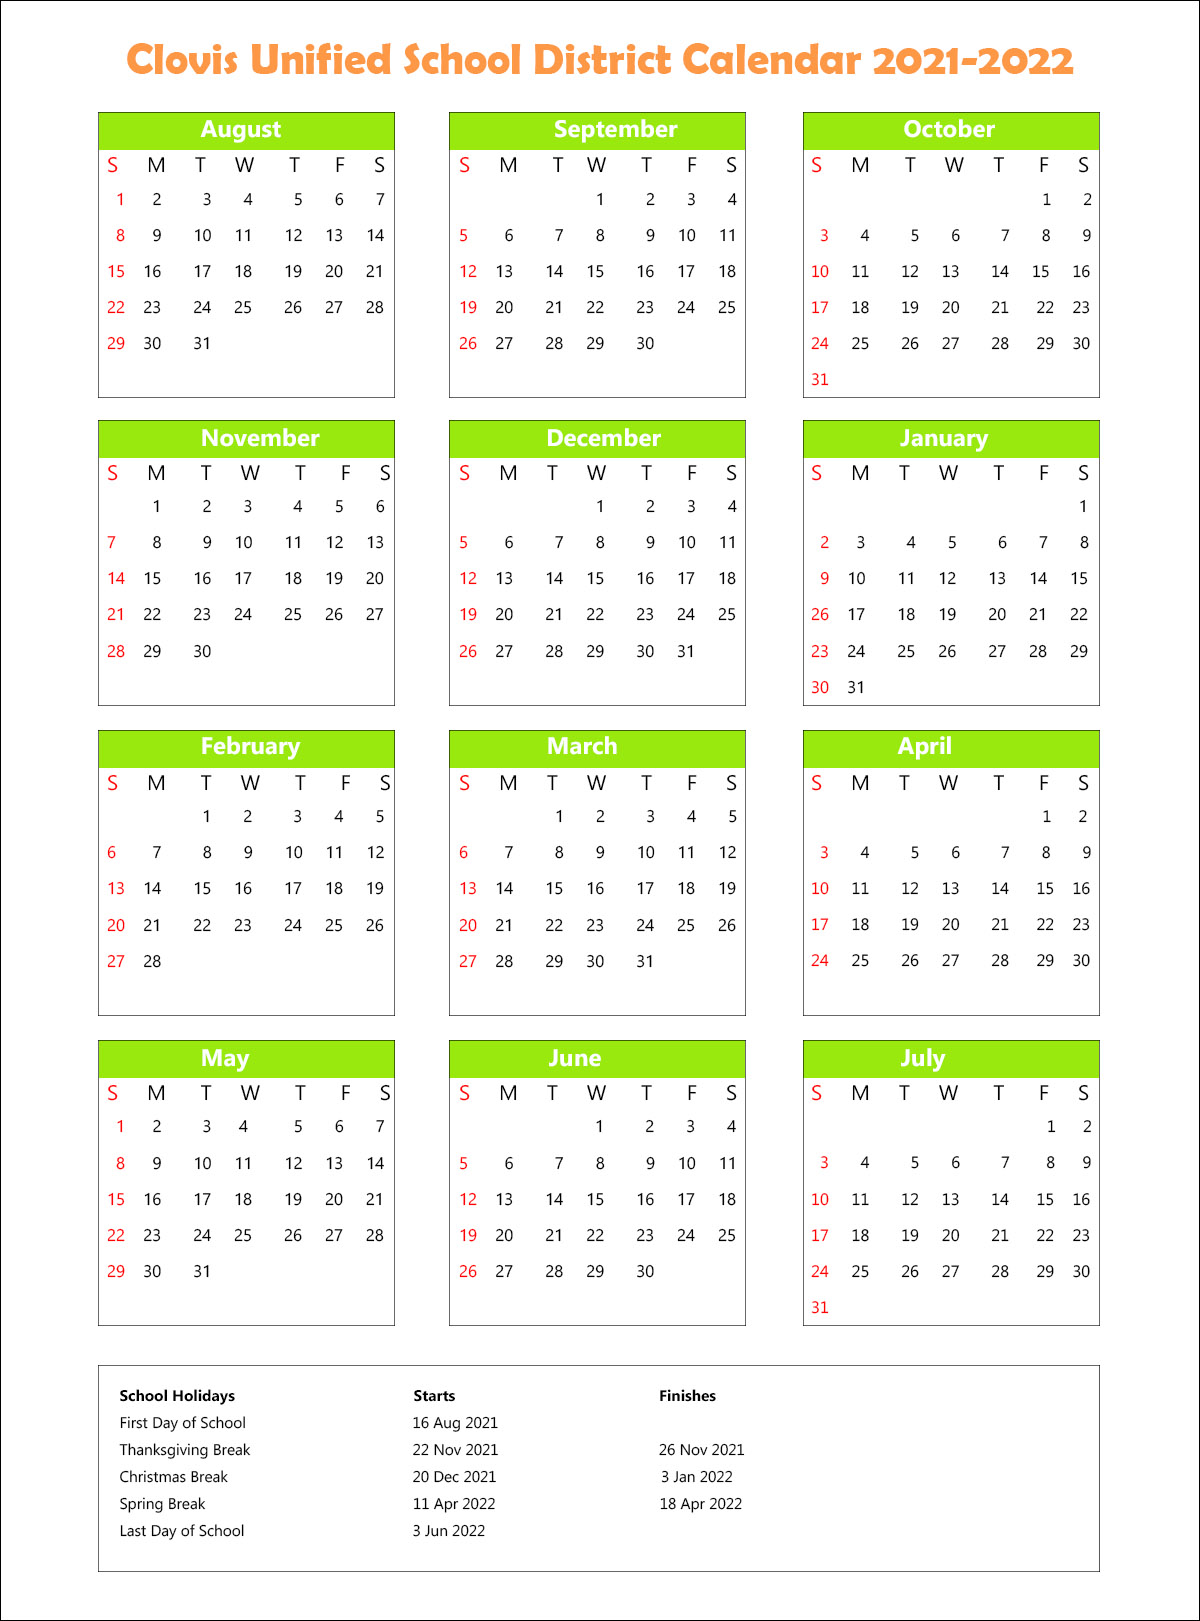 Clovis Unified School District, California Calendar Holidays 2021